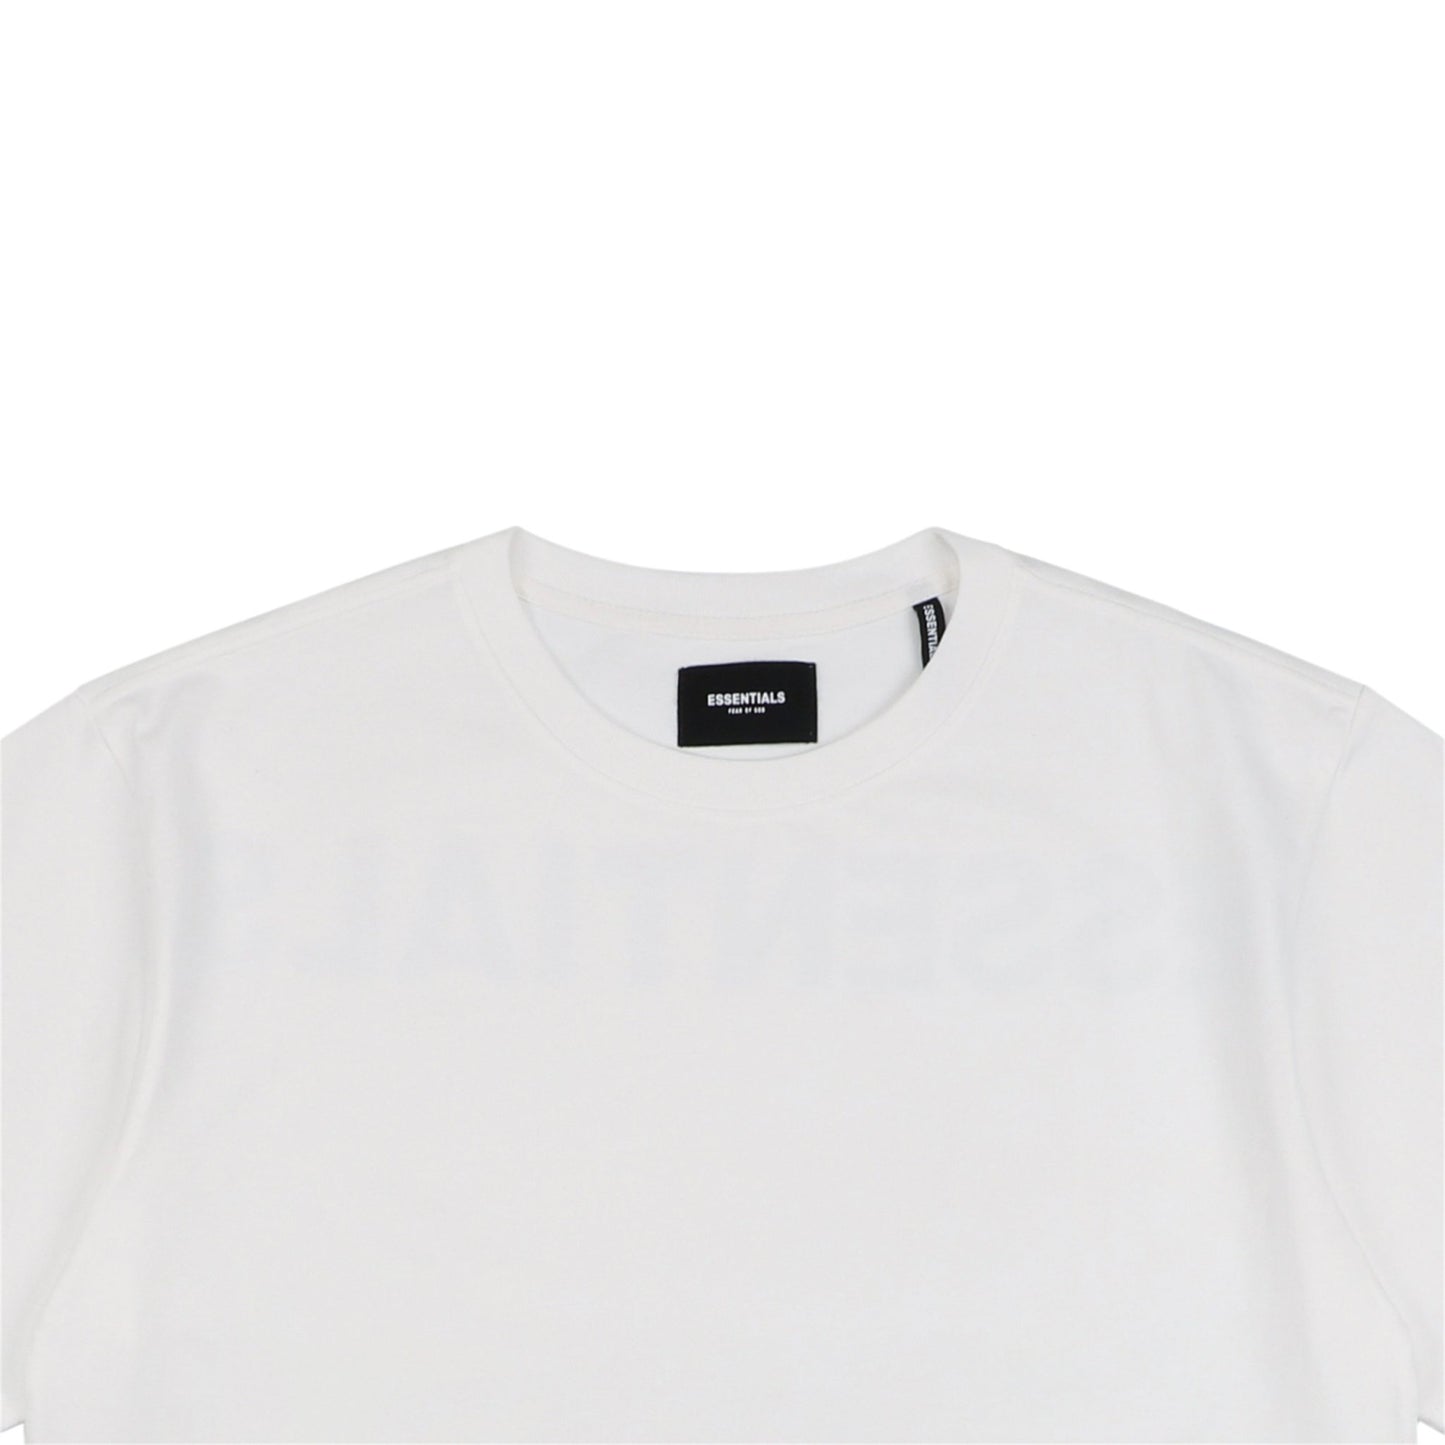 FOG White E55ential5 T-Shirt